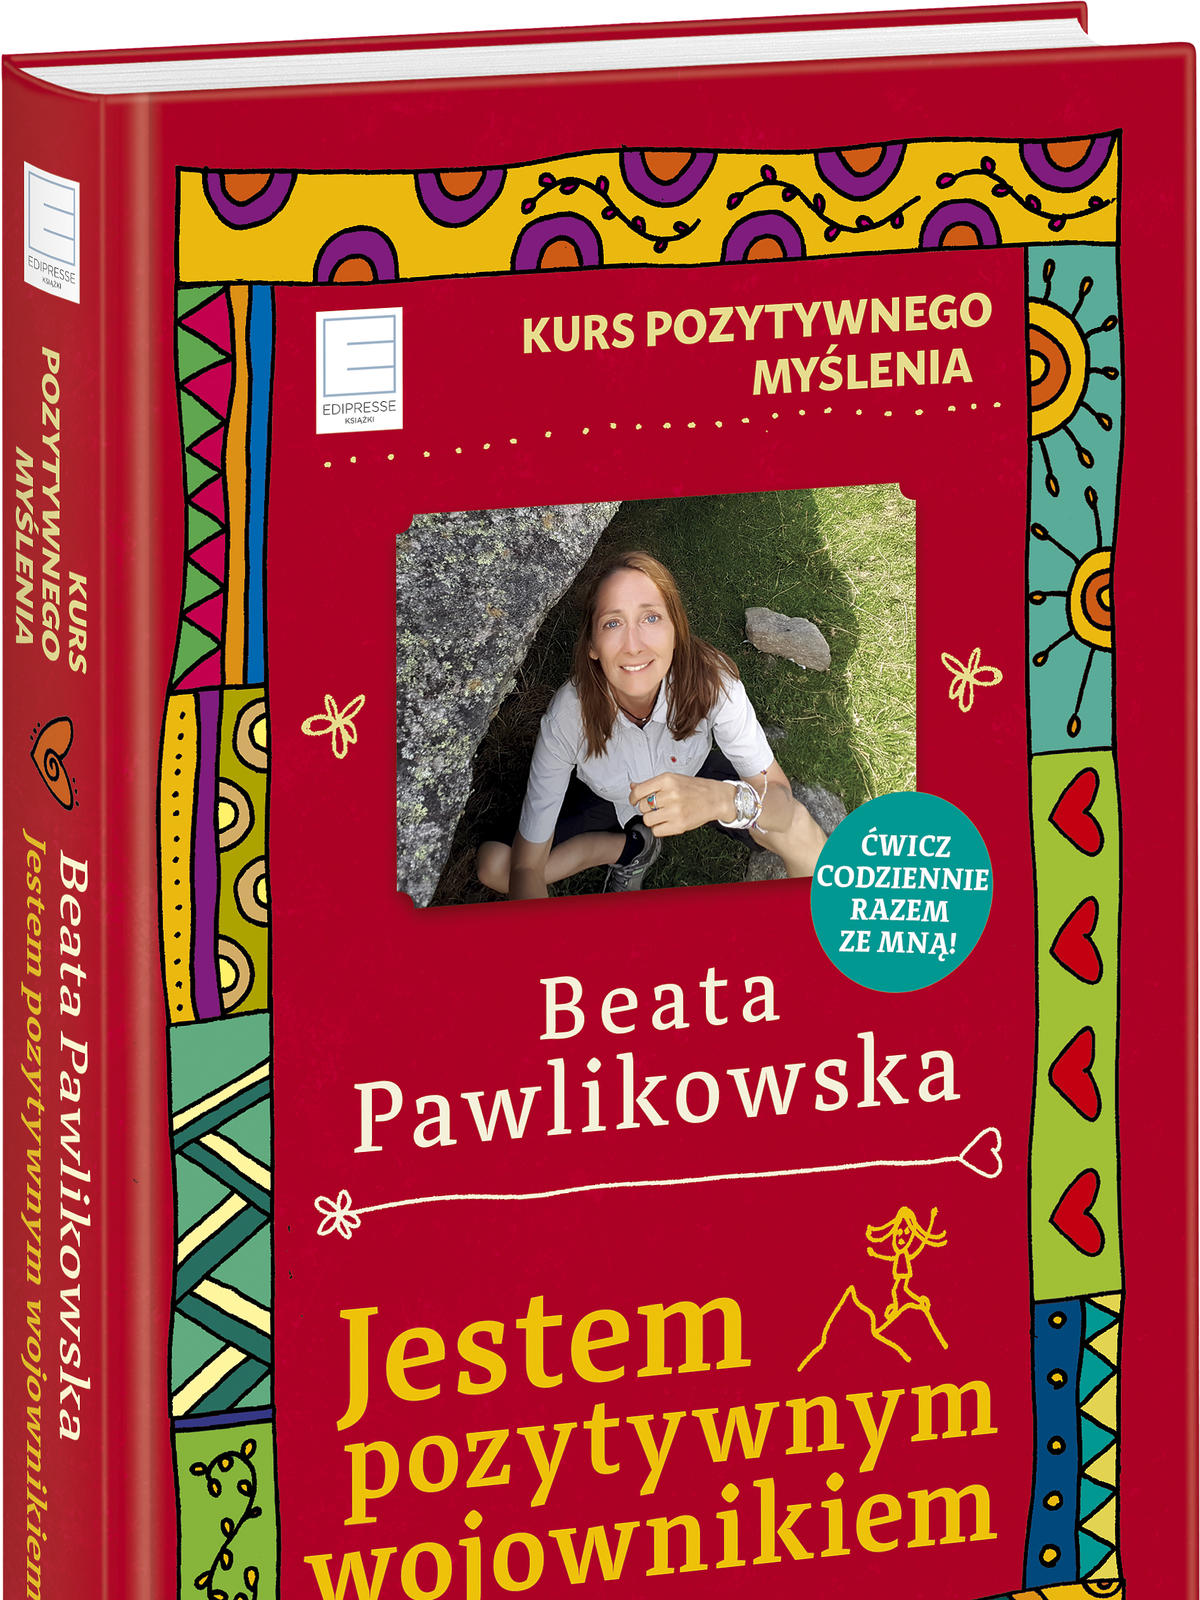 Beata Pawlikowska, 